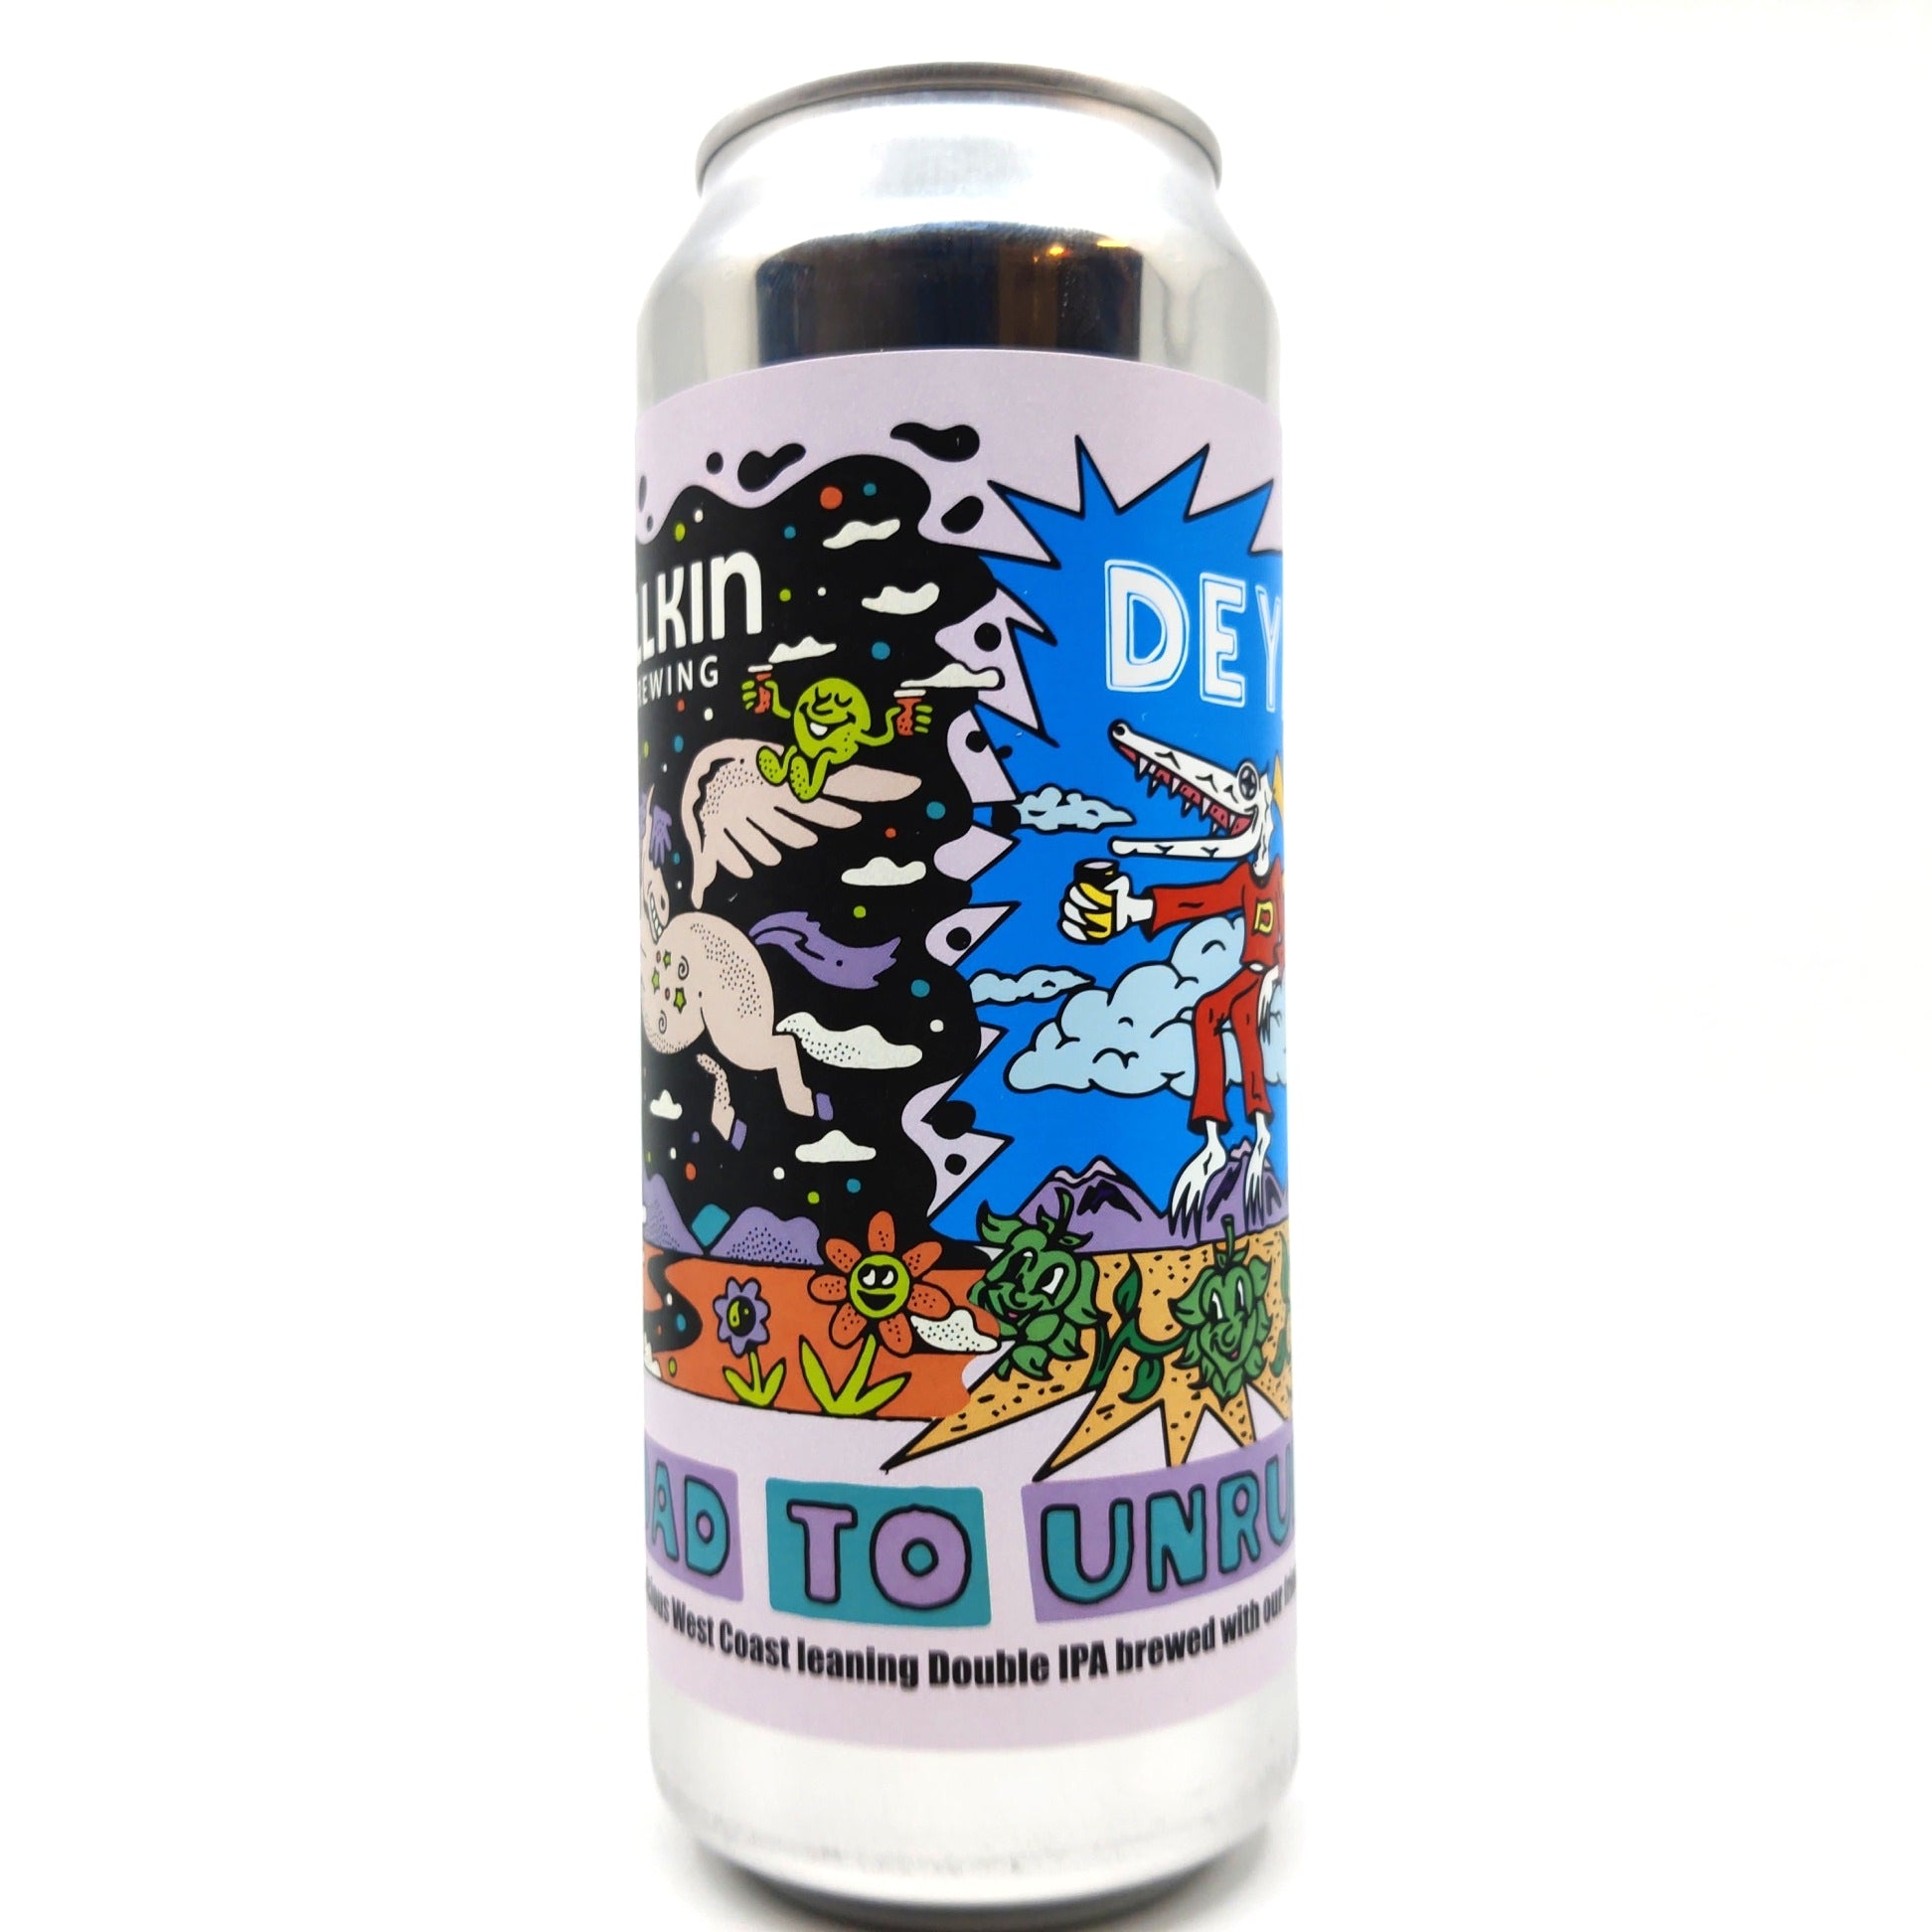 DEYA x Allkin Brewing Road to Unruin Double IPA 8% (500ml can)-Hop Burns & Black